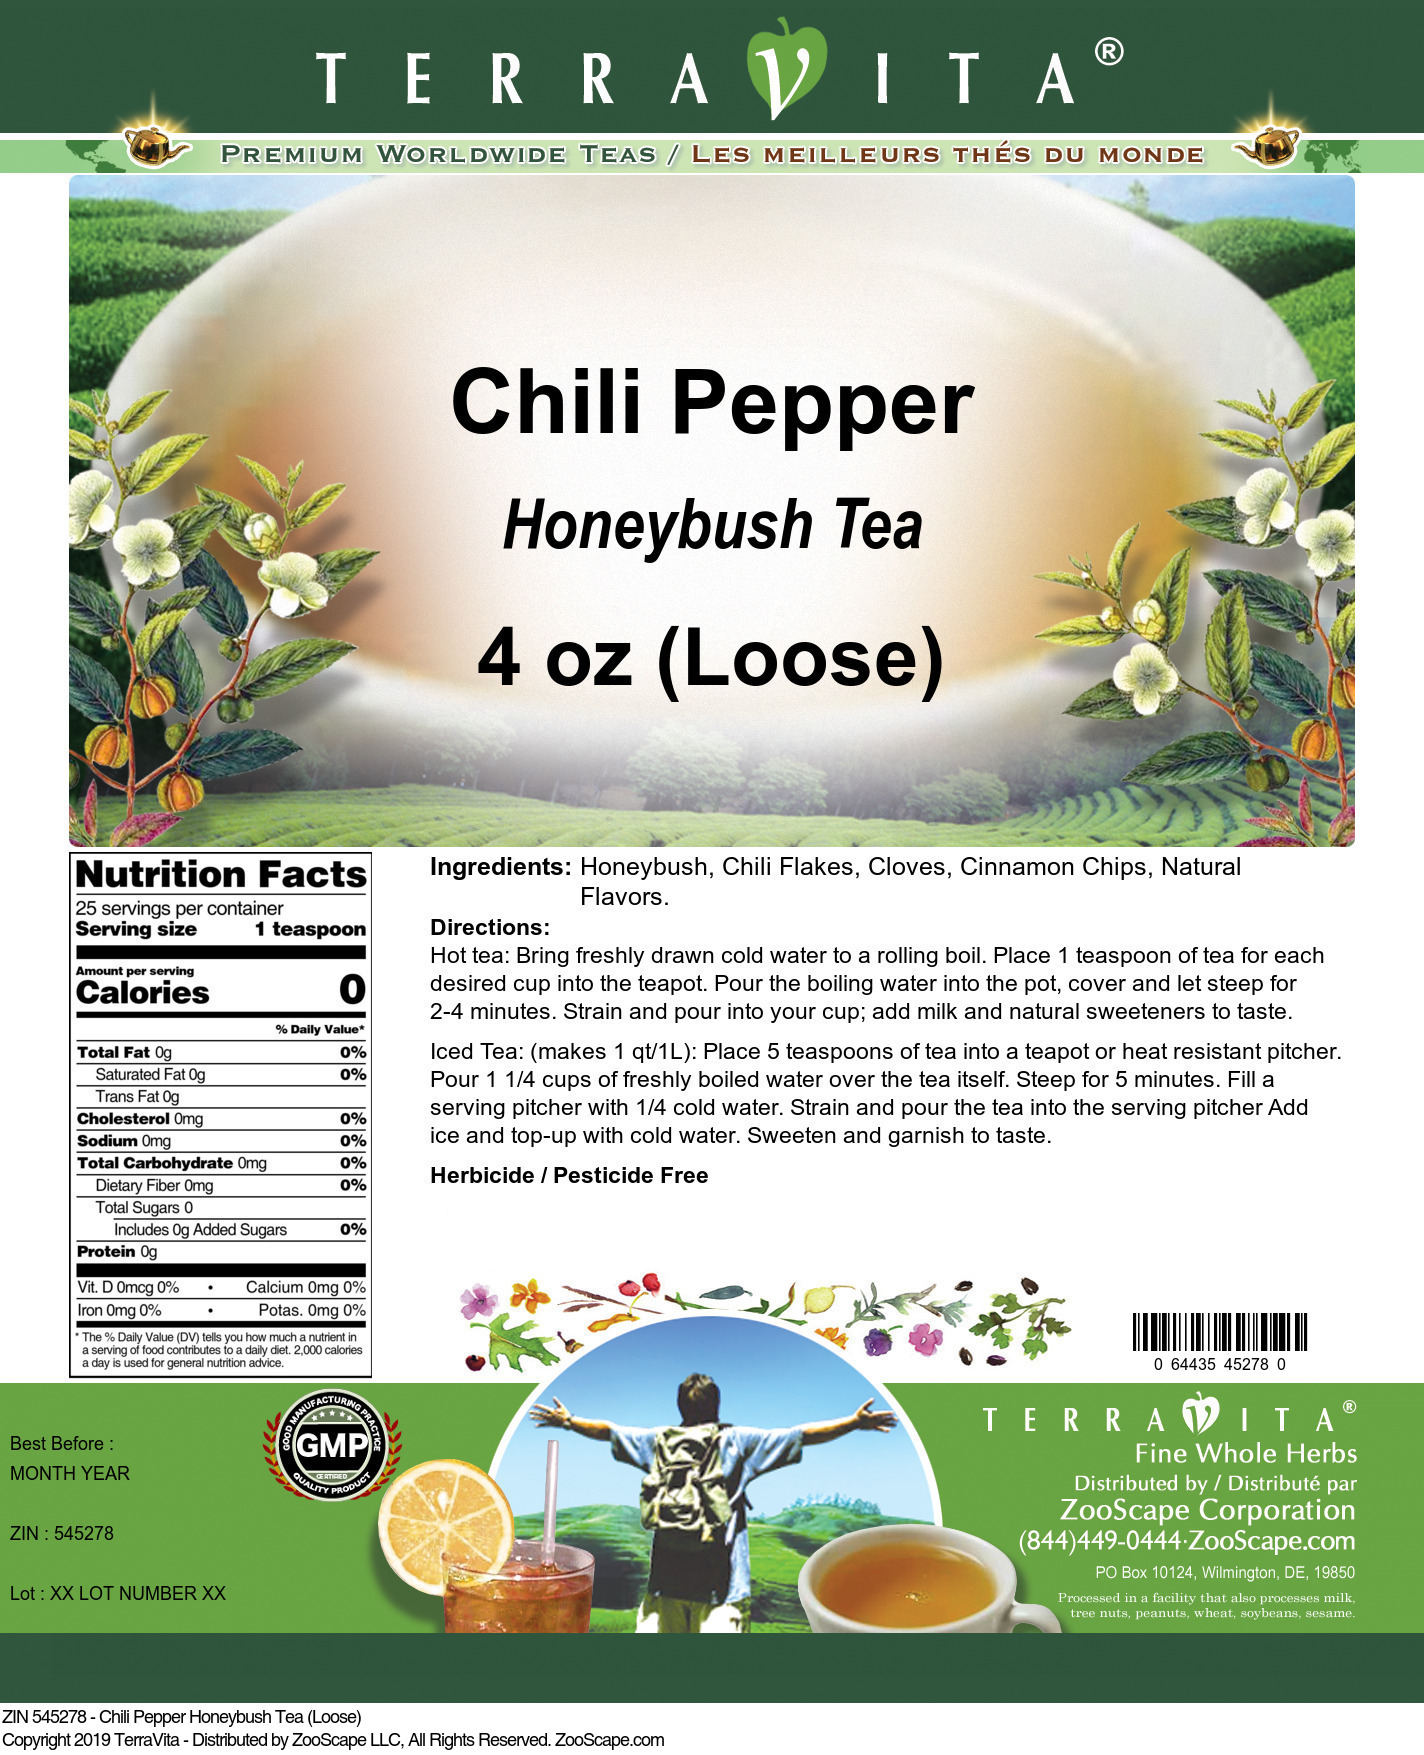 Chili Pepper Honeybush Tea (Loose) - Label